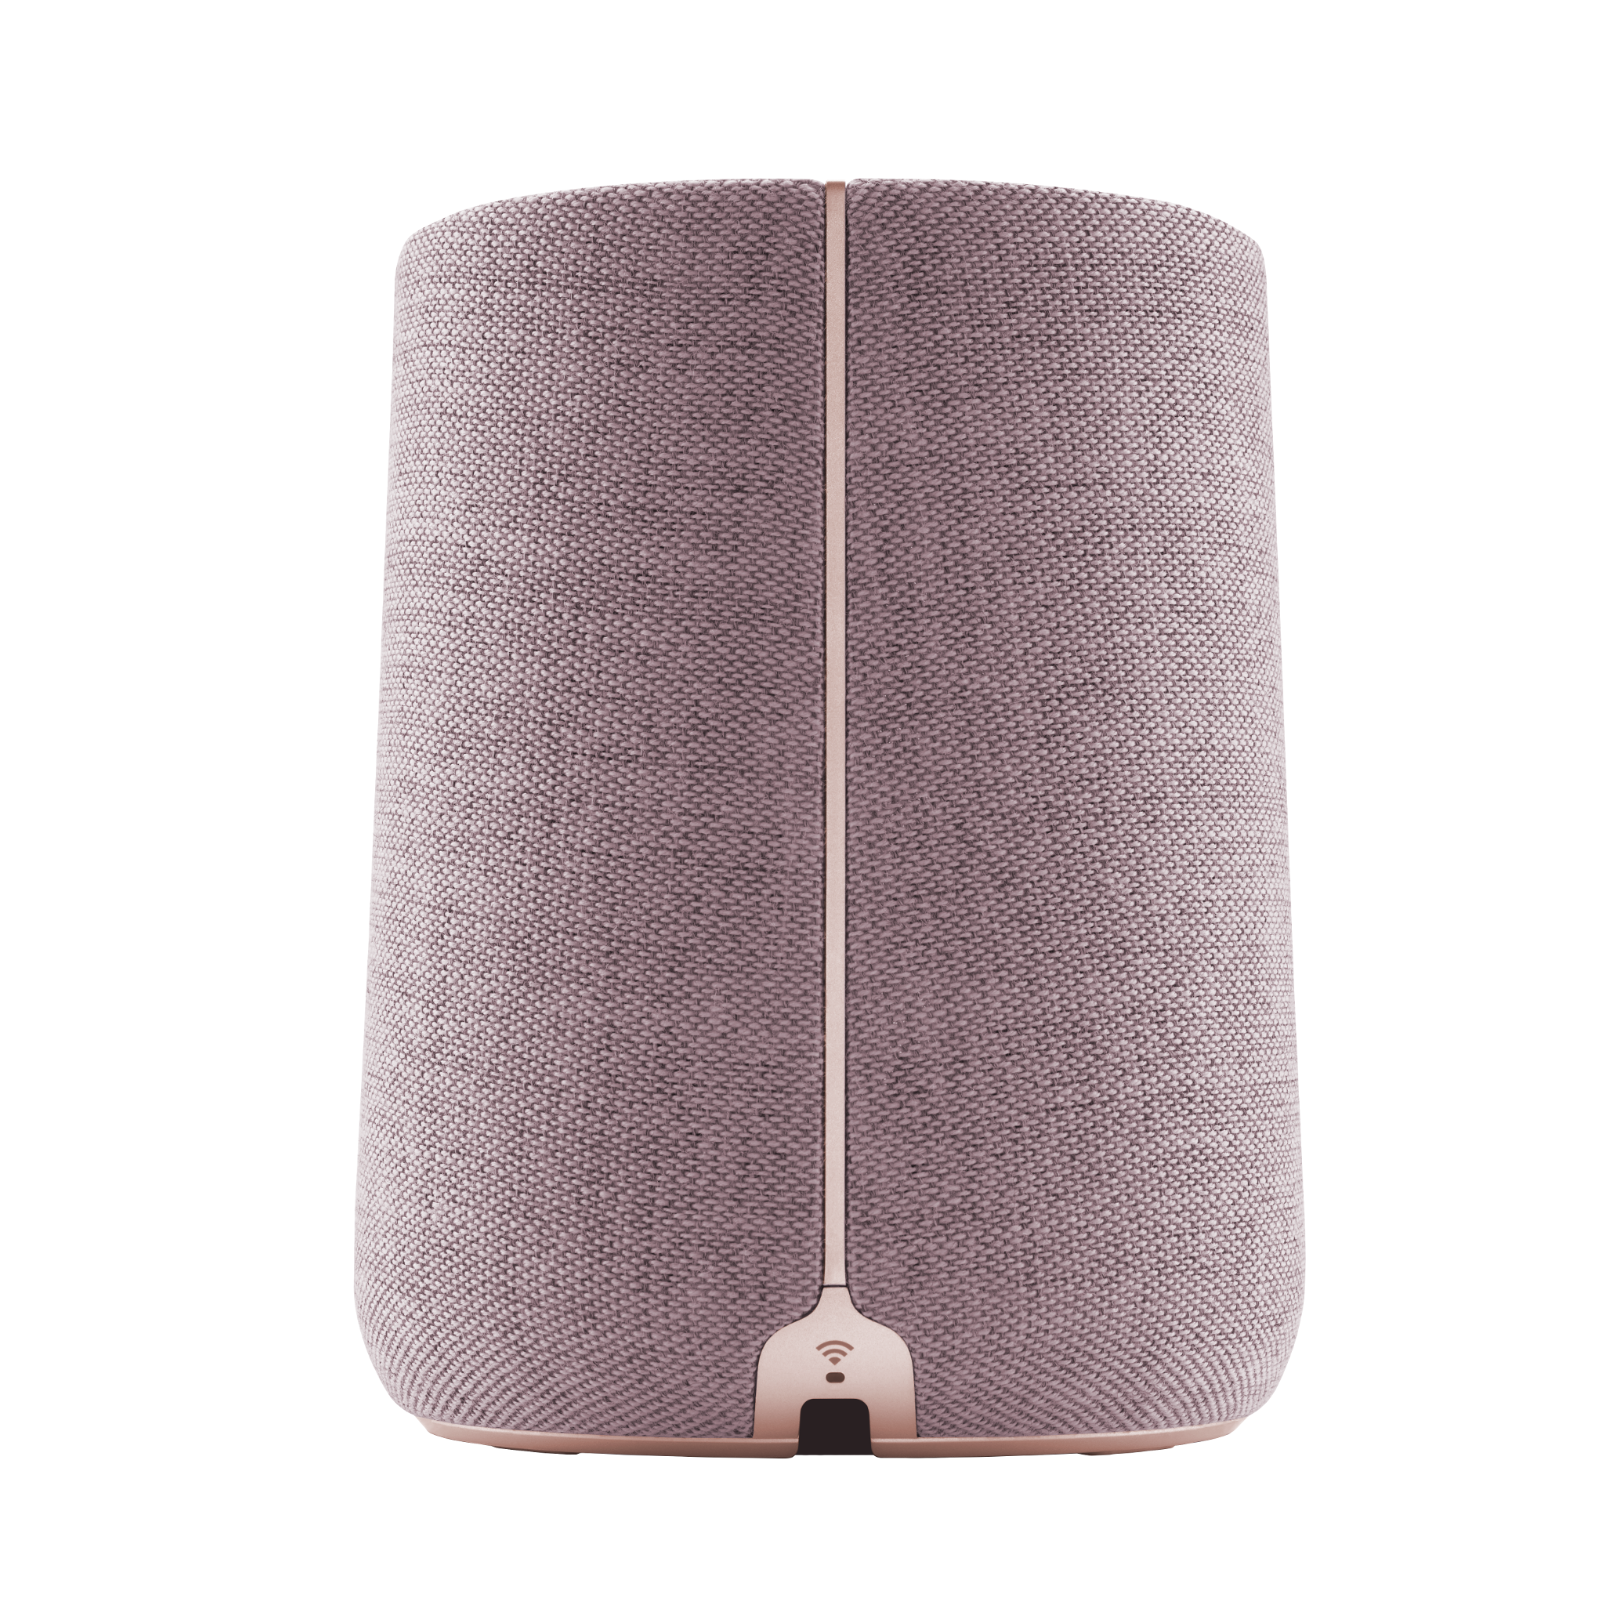 Harman Kardon Citation One MKII - Pink - All-in-one smart speaker with room-filling sound - Back